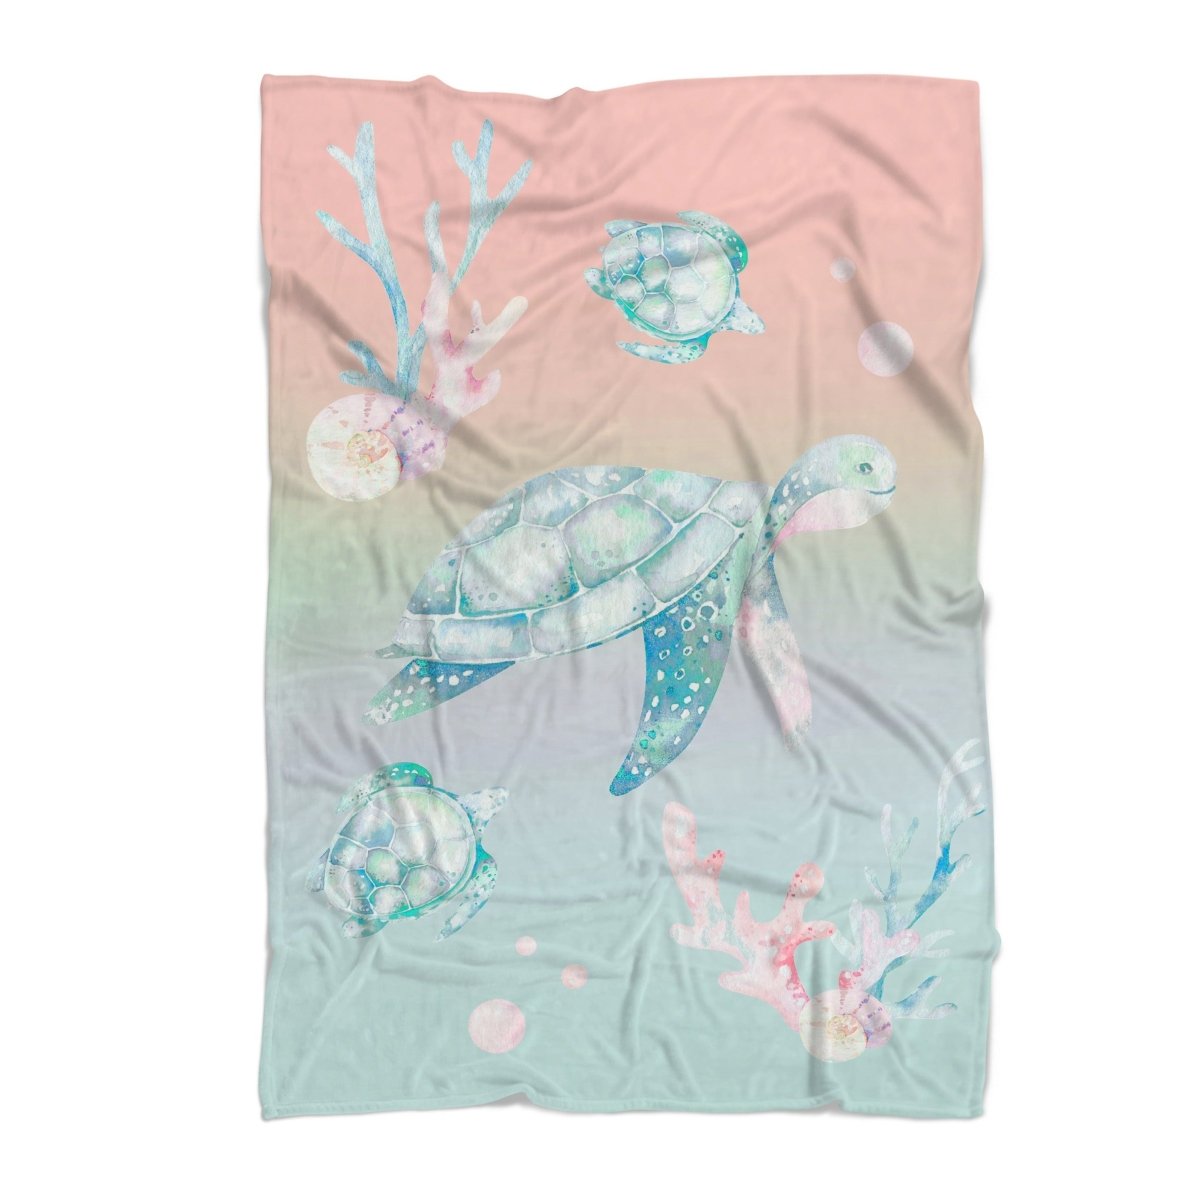 Sweet Sea Turtles Personalized Crib Bedding - gender_boy, gender_girl, gender_neutral